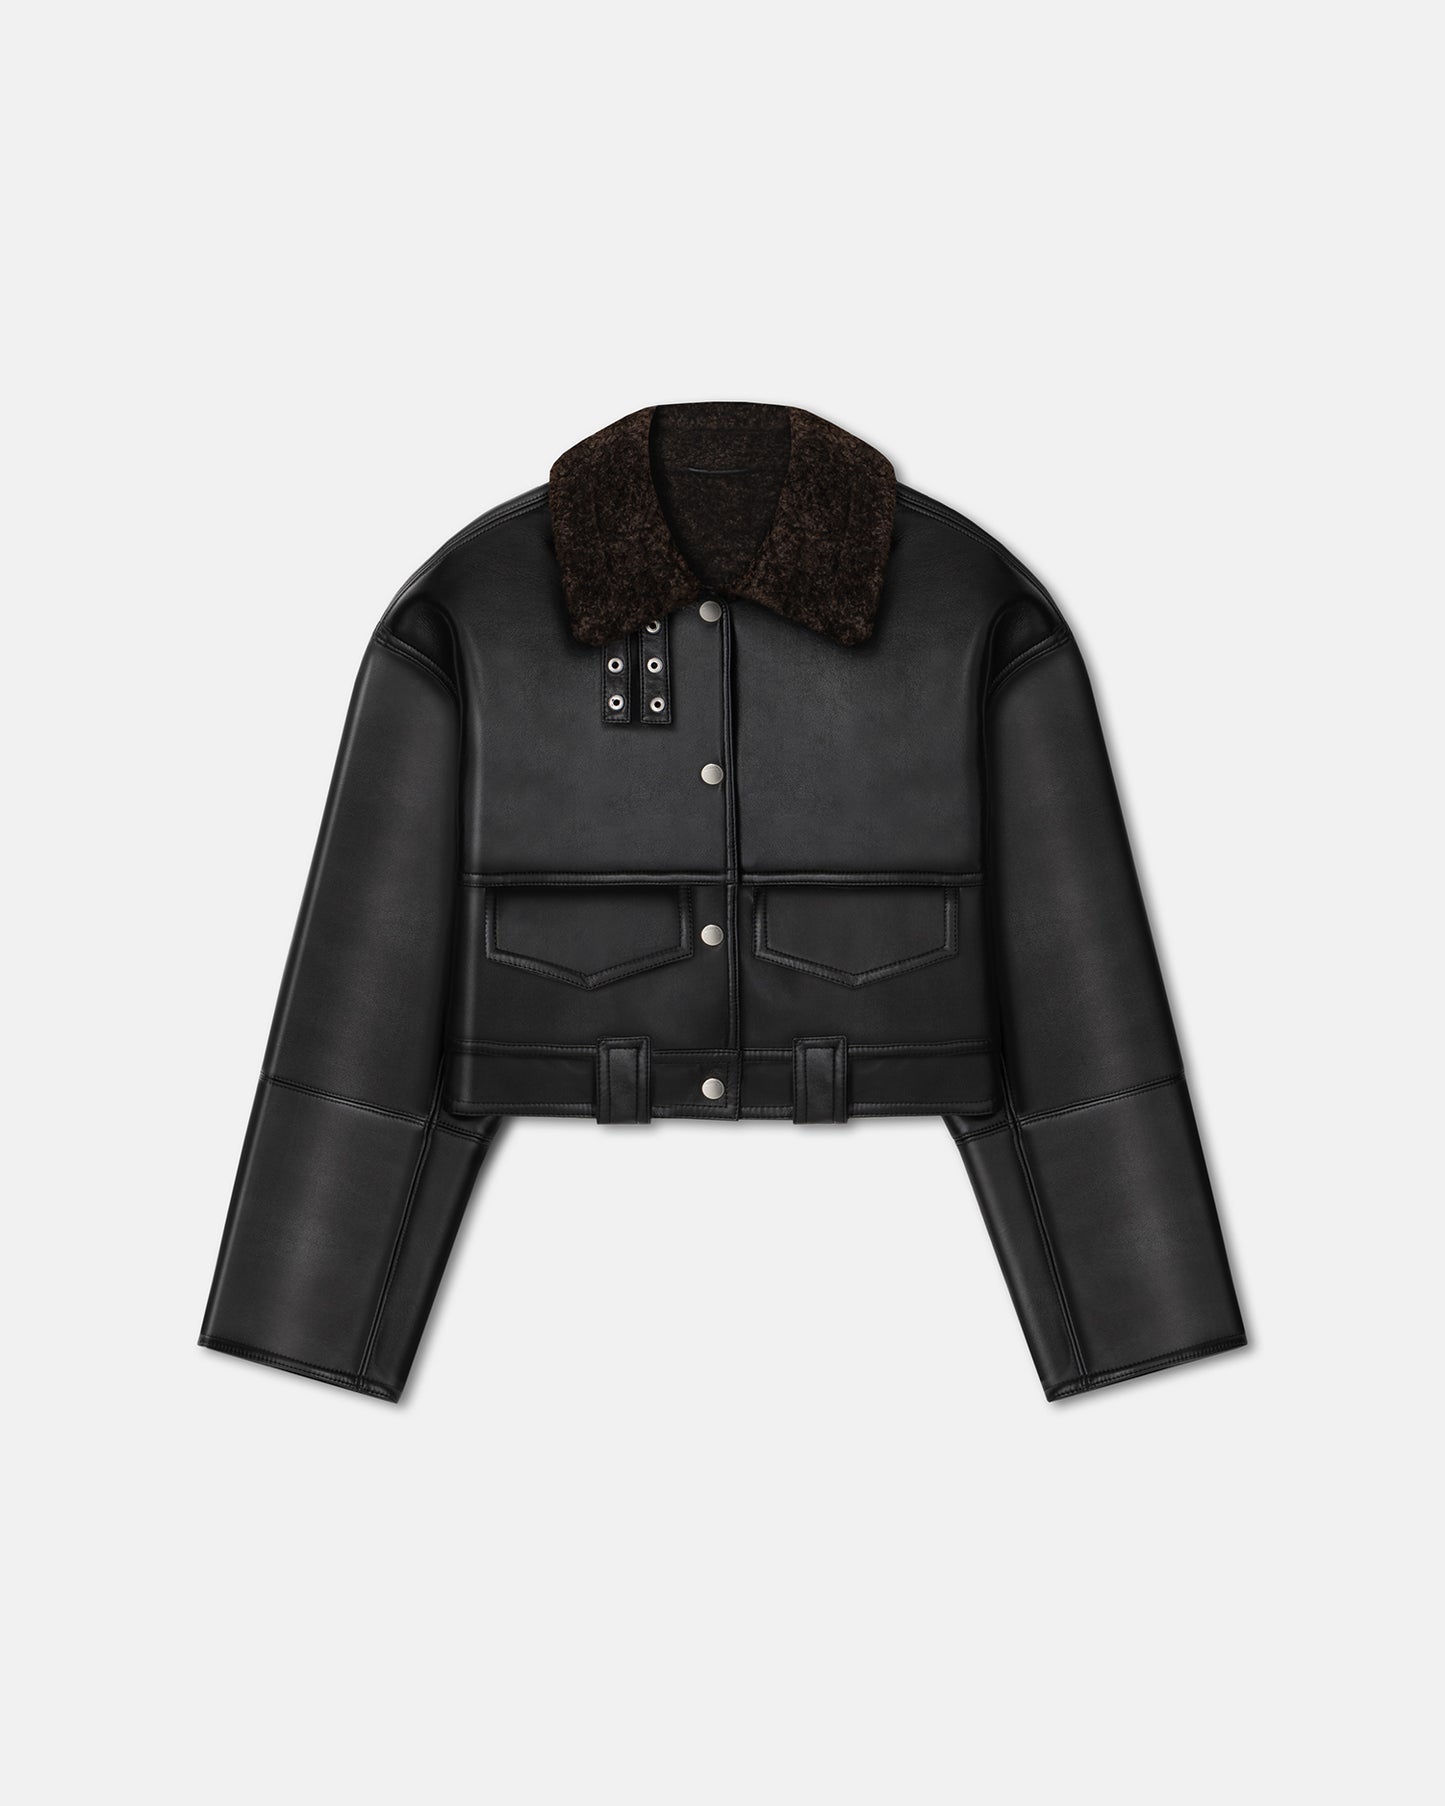 Karla - Regenerated Leather Jacket - Black Brown